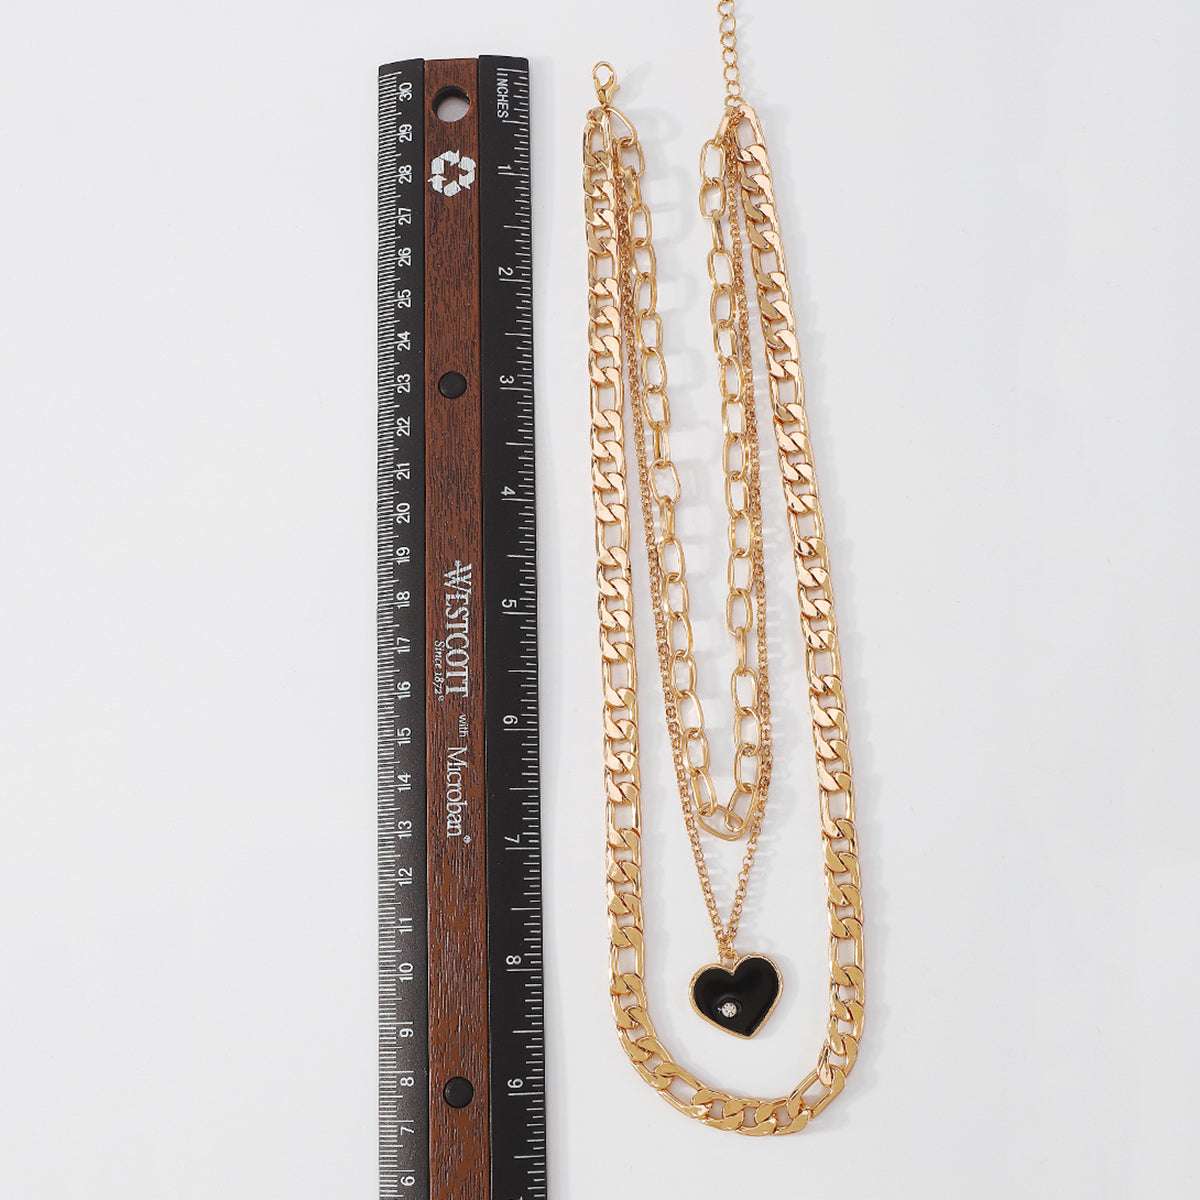 Punk Layered Chain Enamel Heart Pendant Necklace medyjewelry